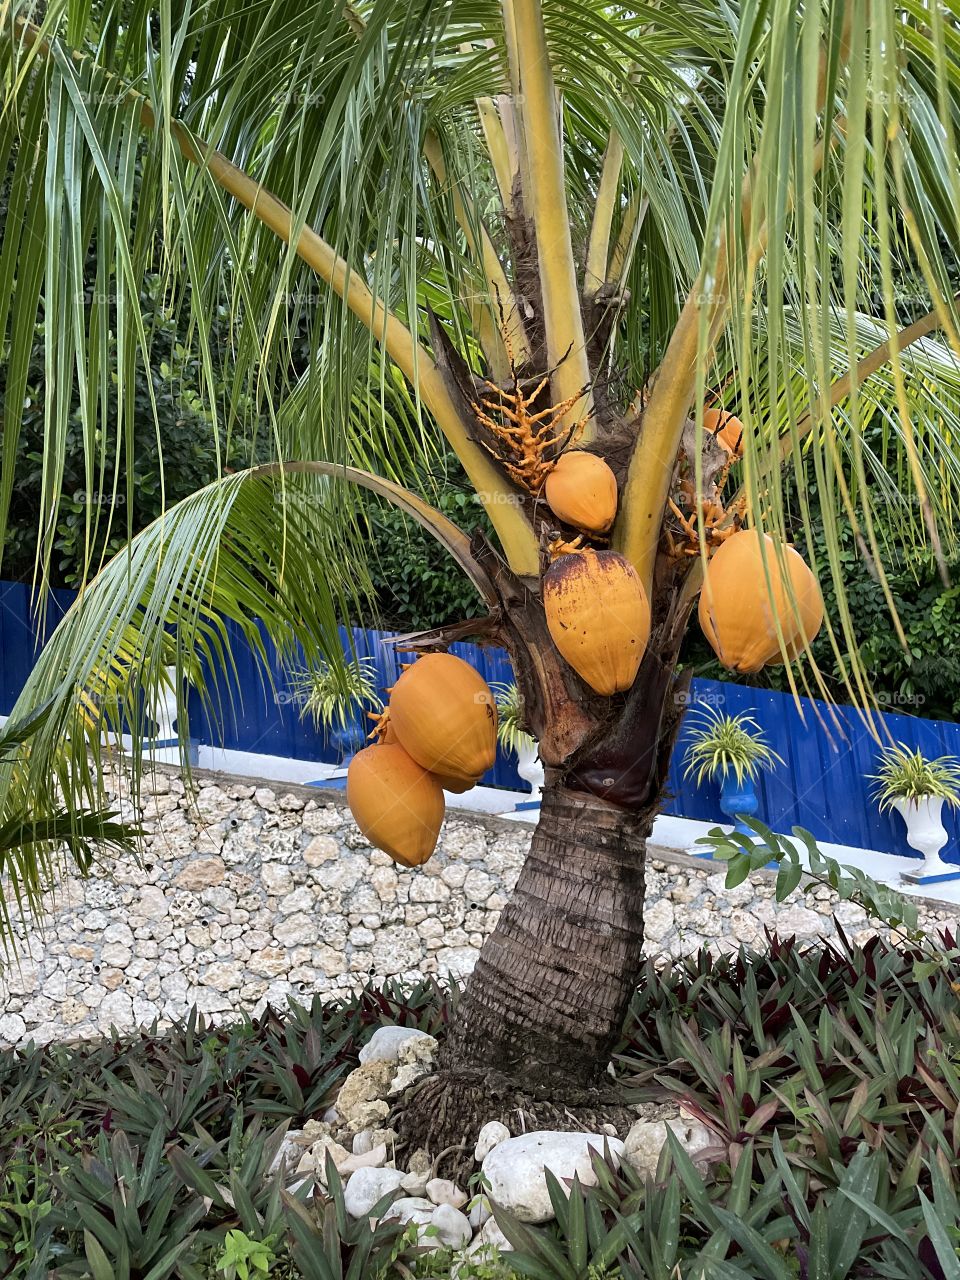 Dwarf coconut tree with fruits